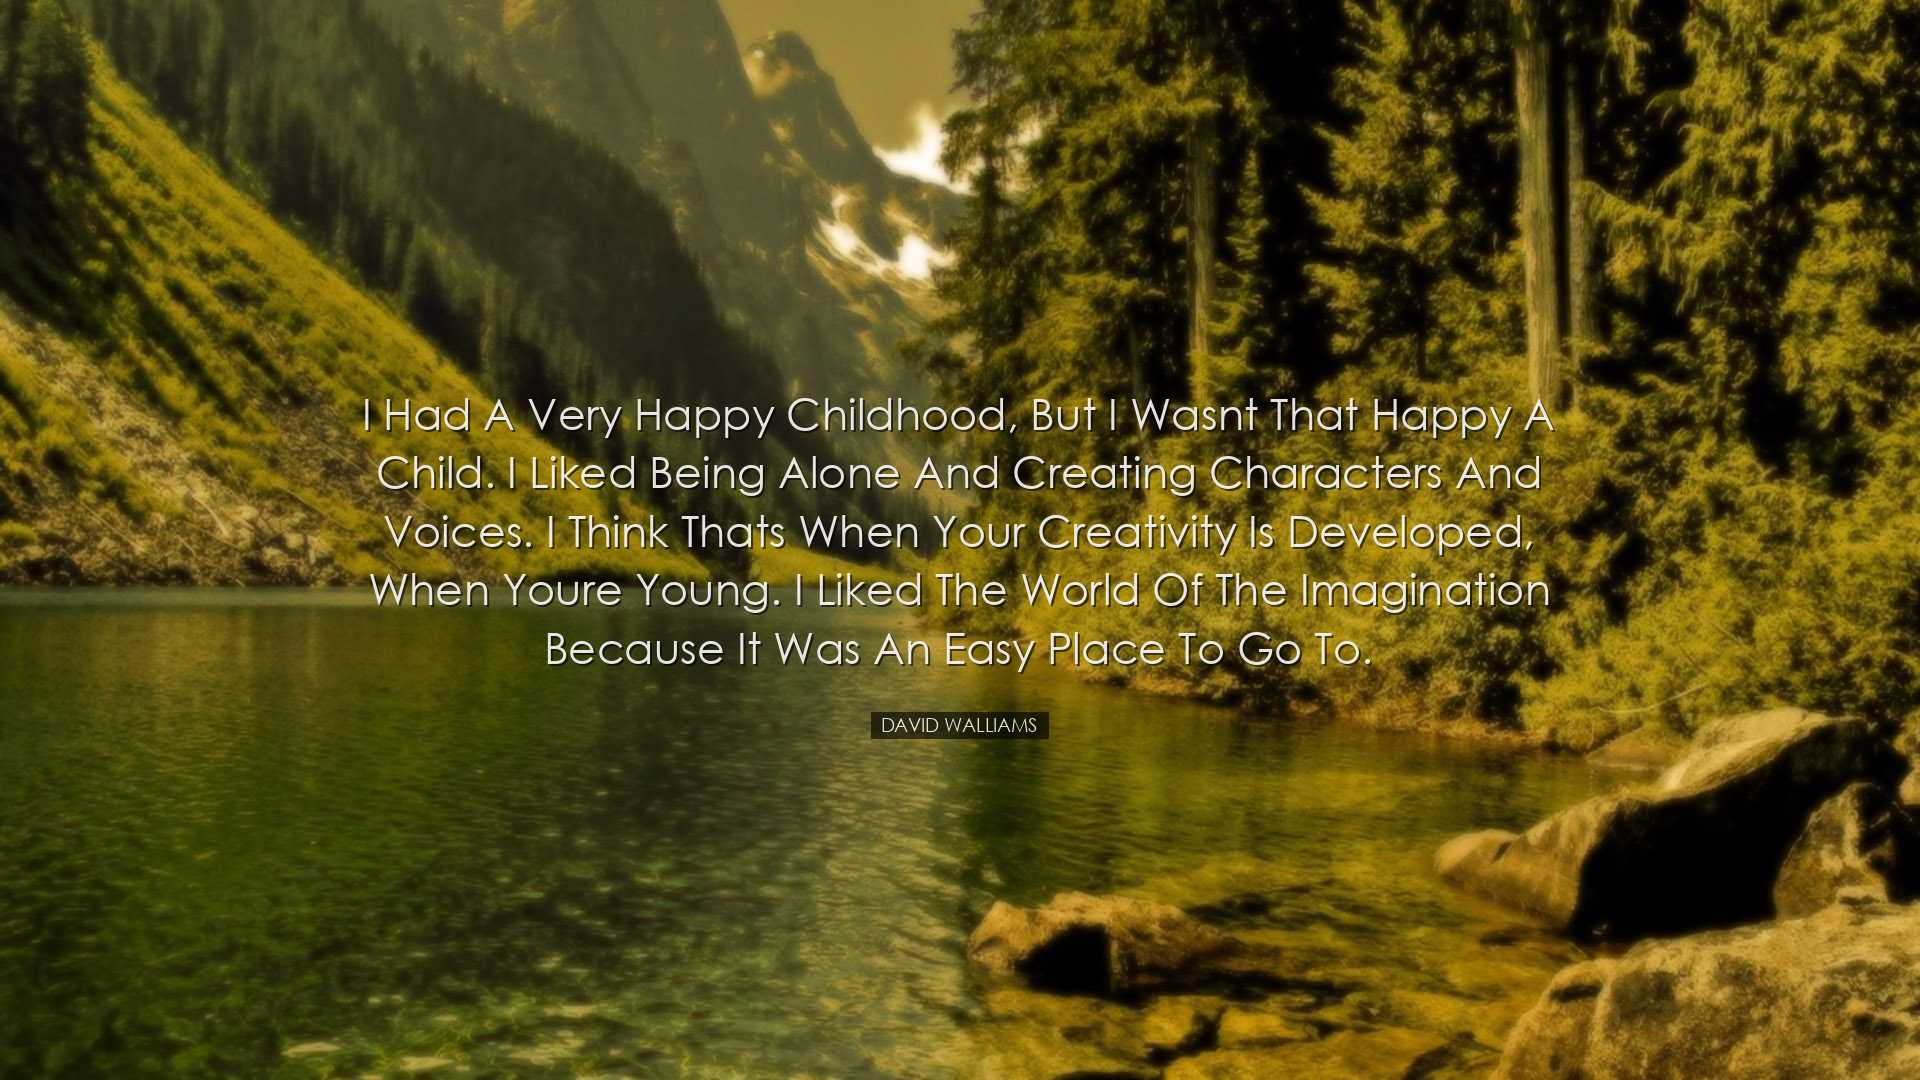 I had a very happy childhood, but I wasnt that happy a child. I li